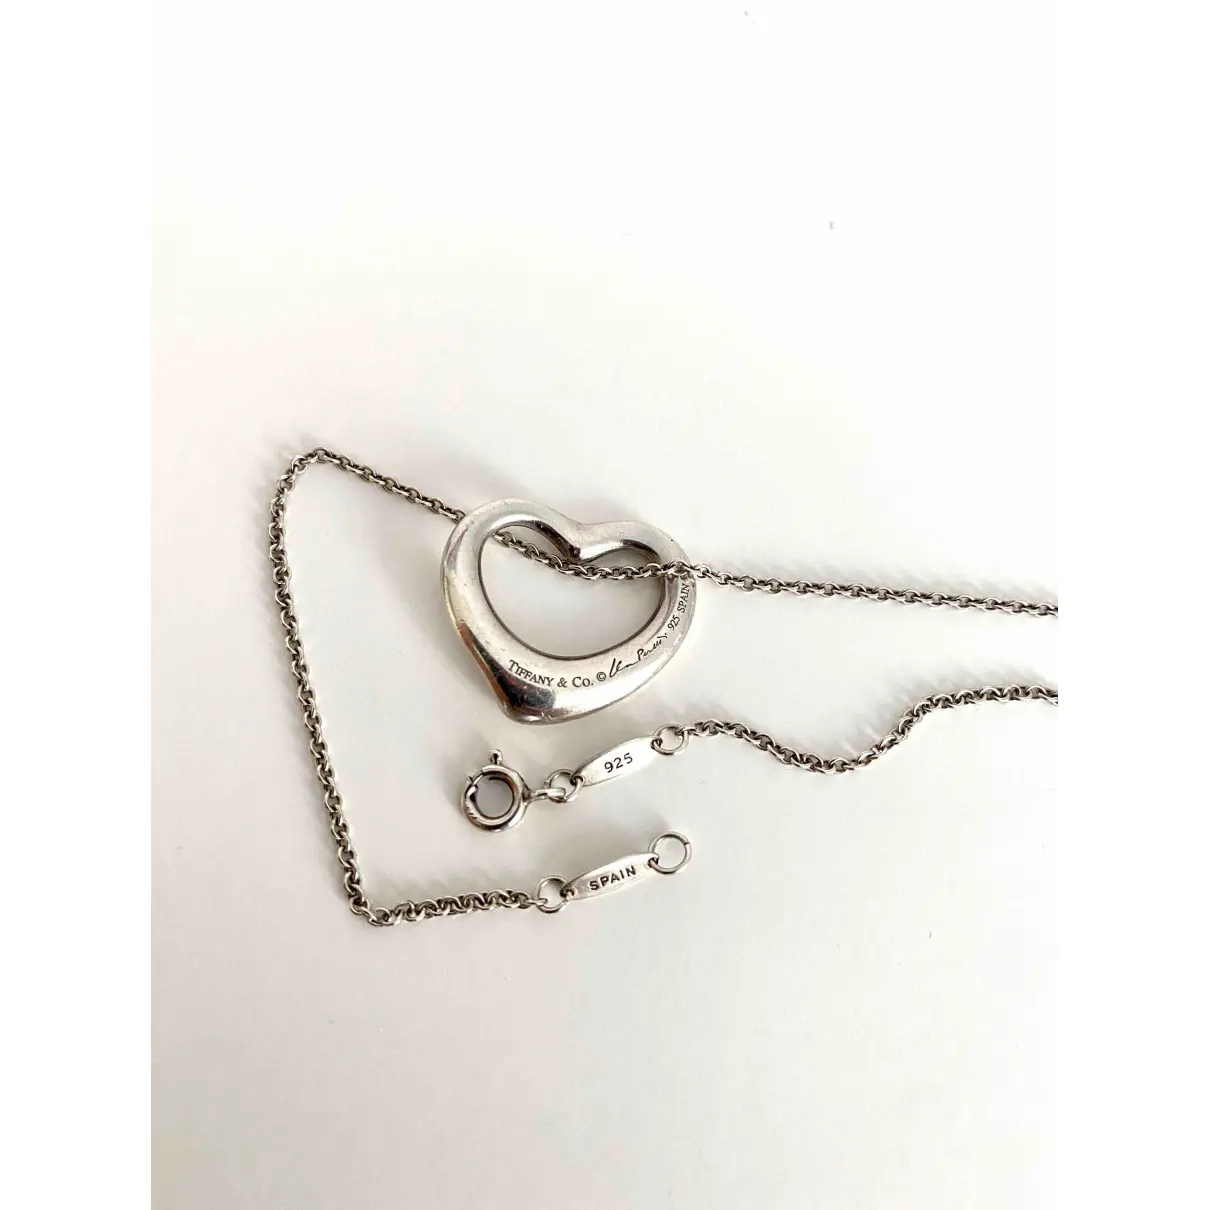 Buy Tiffany & Co Elsa Peretti silver necklace online